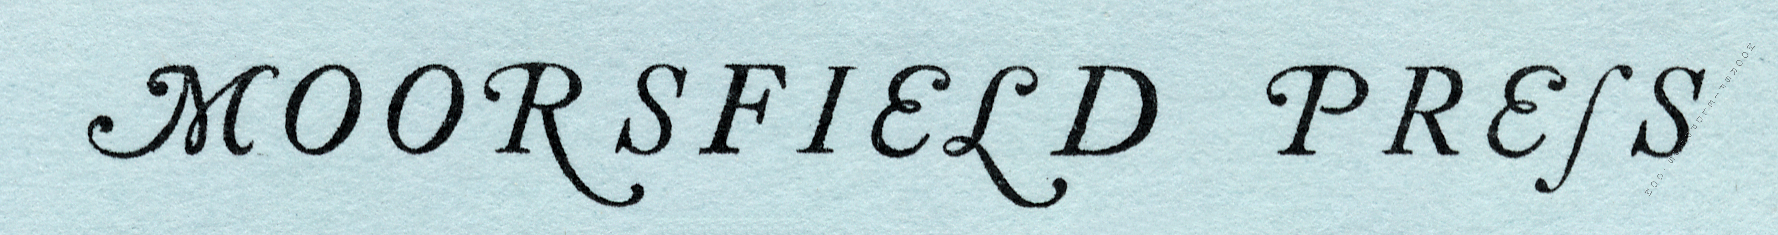 moorsfield press letterhead name
                              caslon itallics